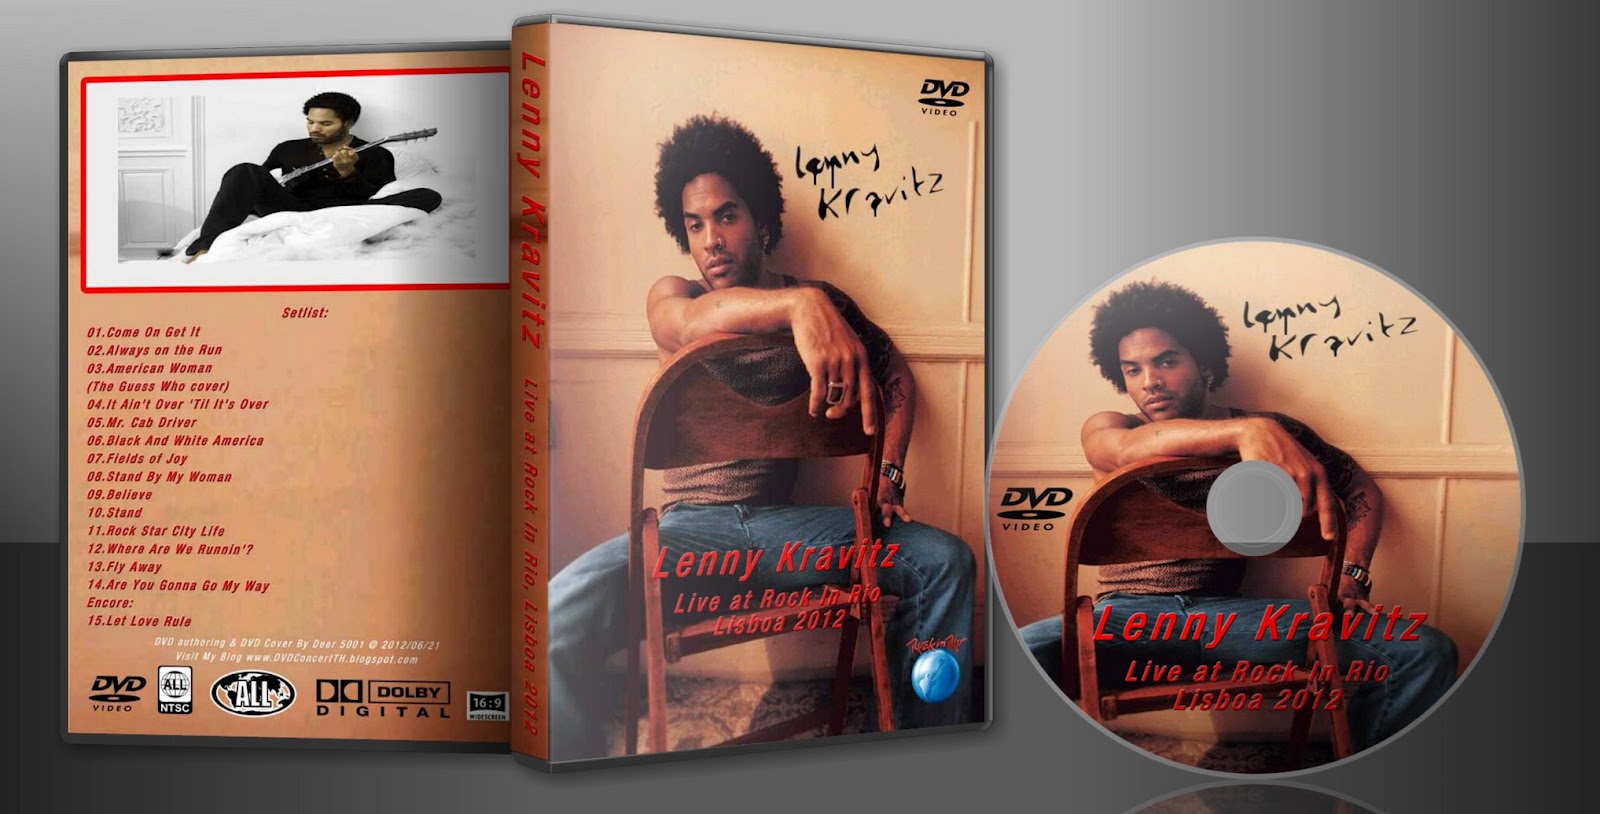 https://blogger.googleusercontent.com/img/b/R29vZ2xl/AVvXsEhKy5h7ICFtWgVohfmrmWGLegtzgG36ITAC9lZAC6lgdMkiDA1IOHtoijkBJIDUBZ6HcxHSYwPOTFLa3eOVDF4VE8KGLeZjPYp4BRiZNQFVgAJC-vaiFhbaqdayHABvgRond3-uN70_oZ9D/s1600/DVD+Cover+For+Show+-+Lenny+Kravitz+-+2012+-+Rock+In+Rio+-+Lisbon.jpg